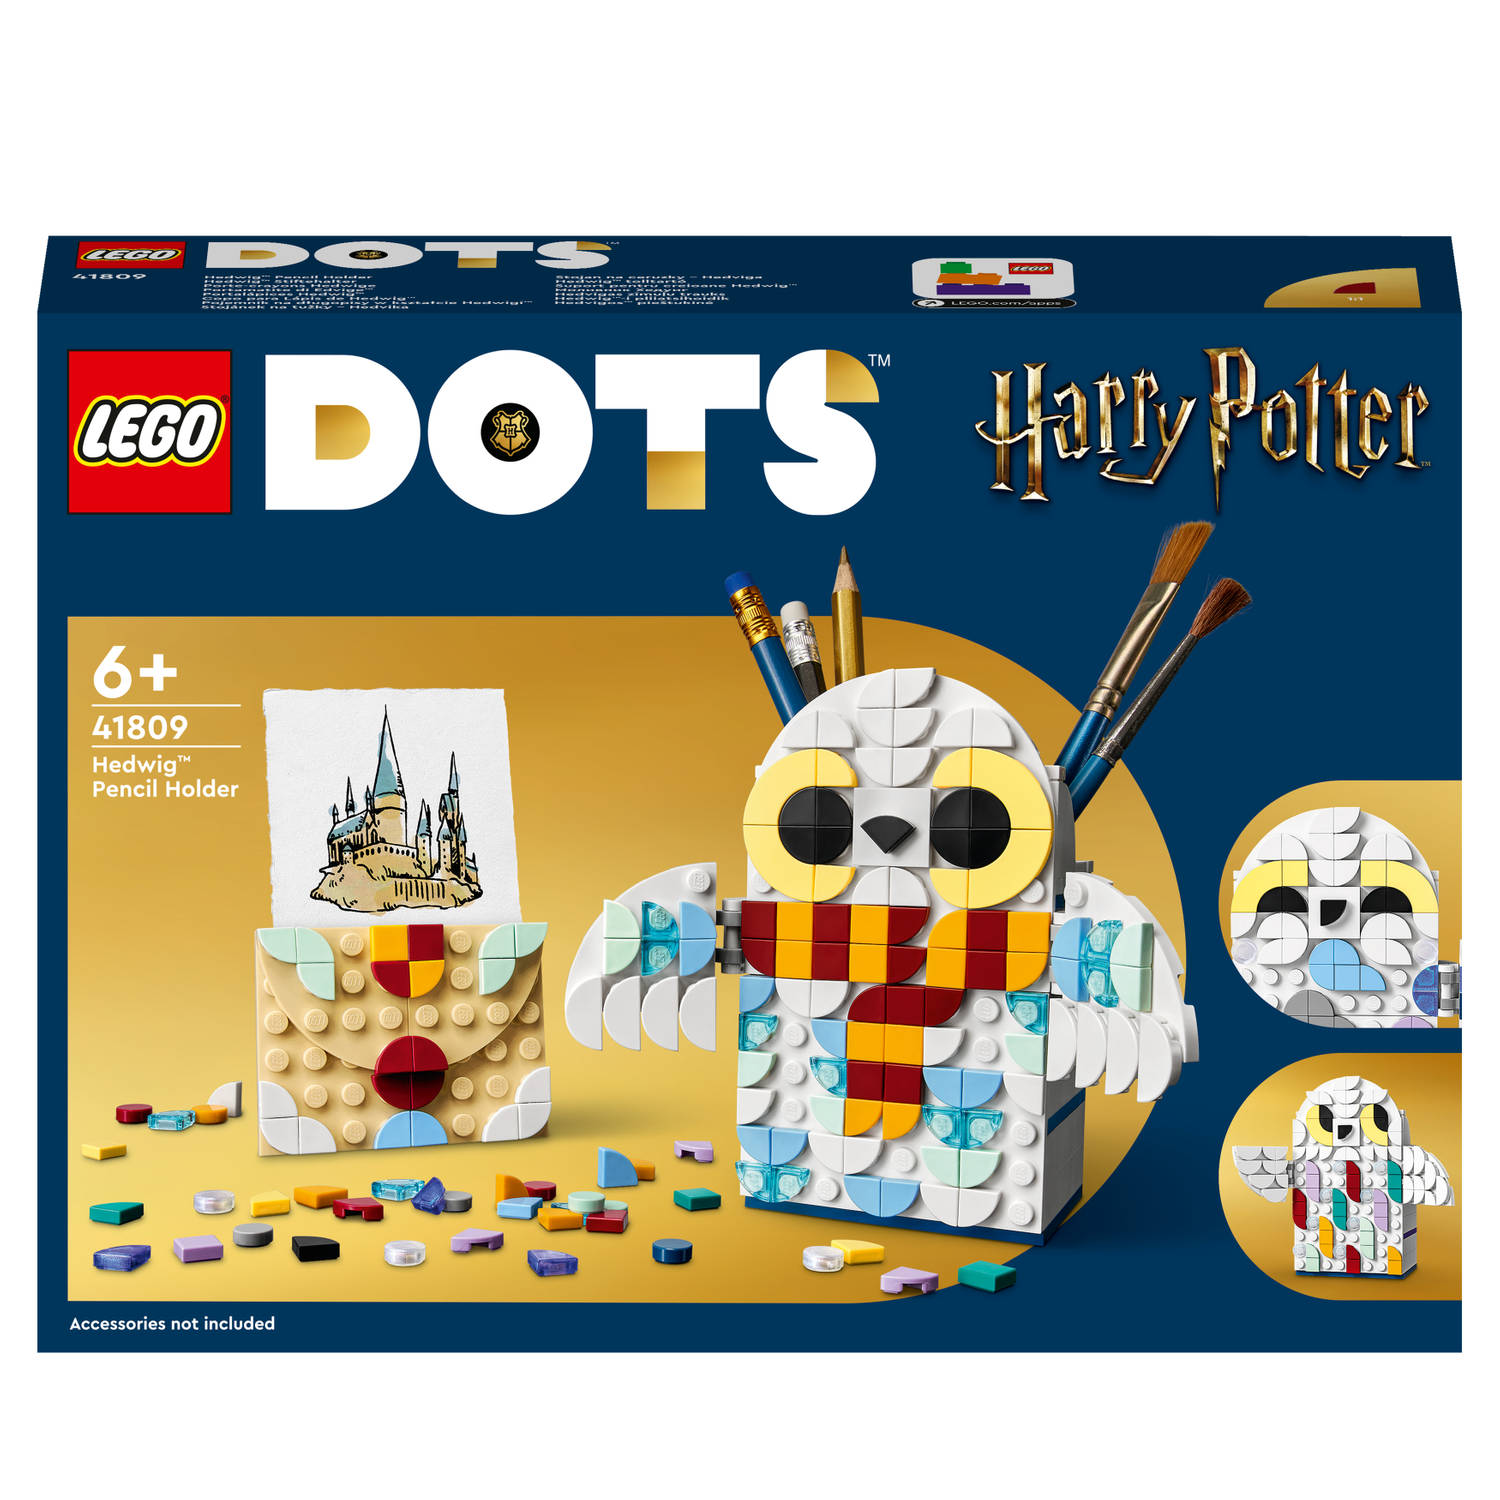 LEGO DOTS - Hedwig™ Potloodhouder 41809